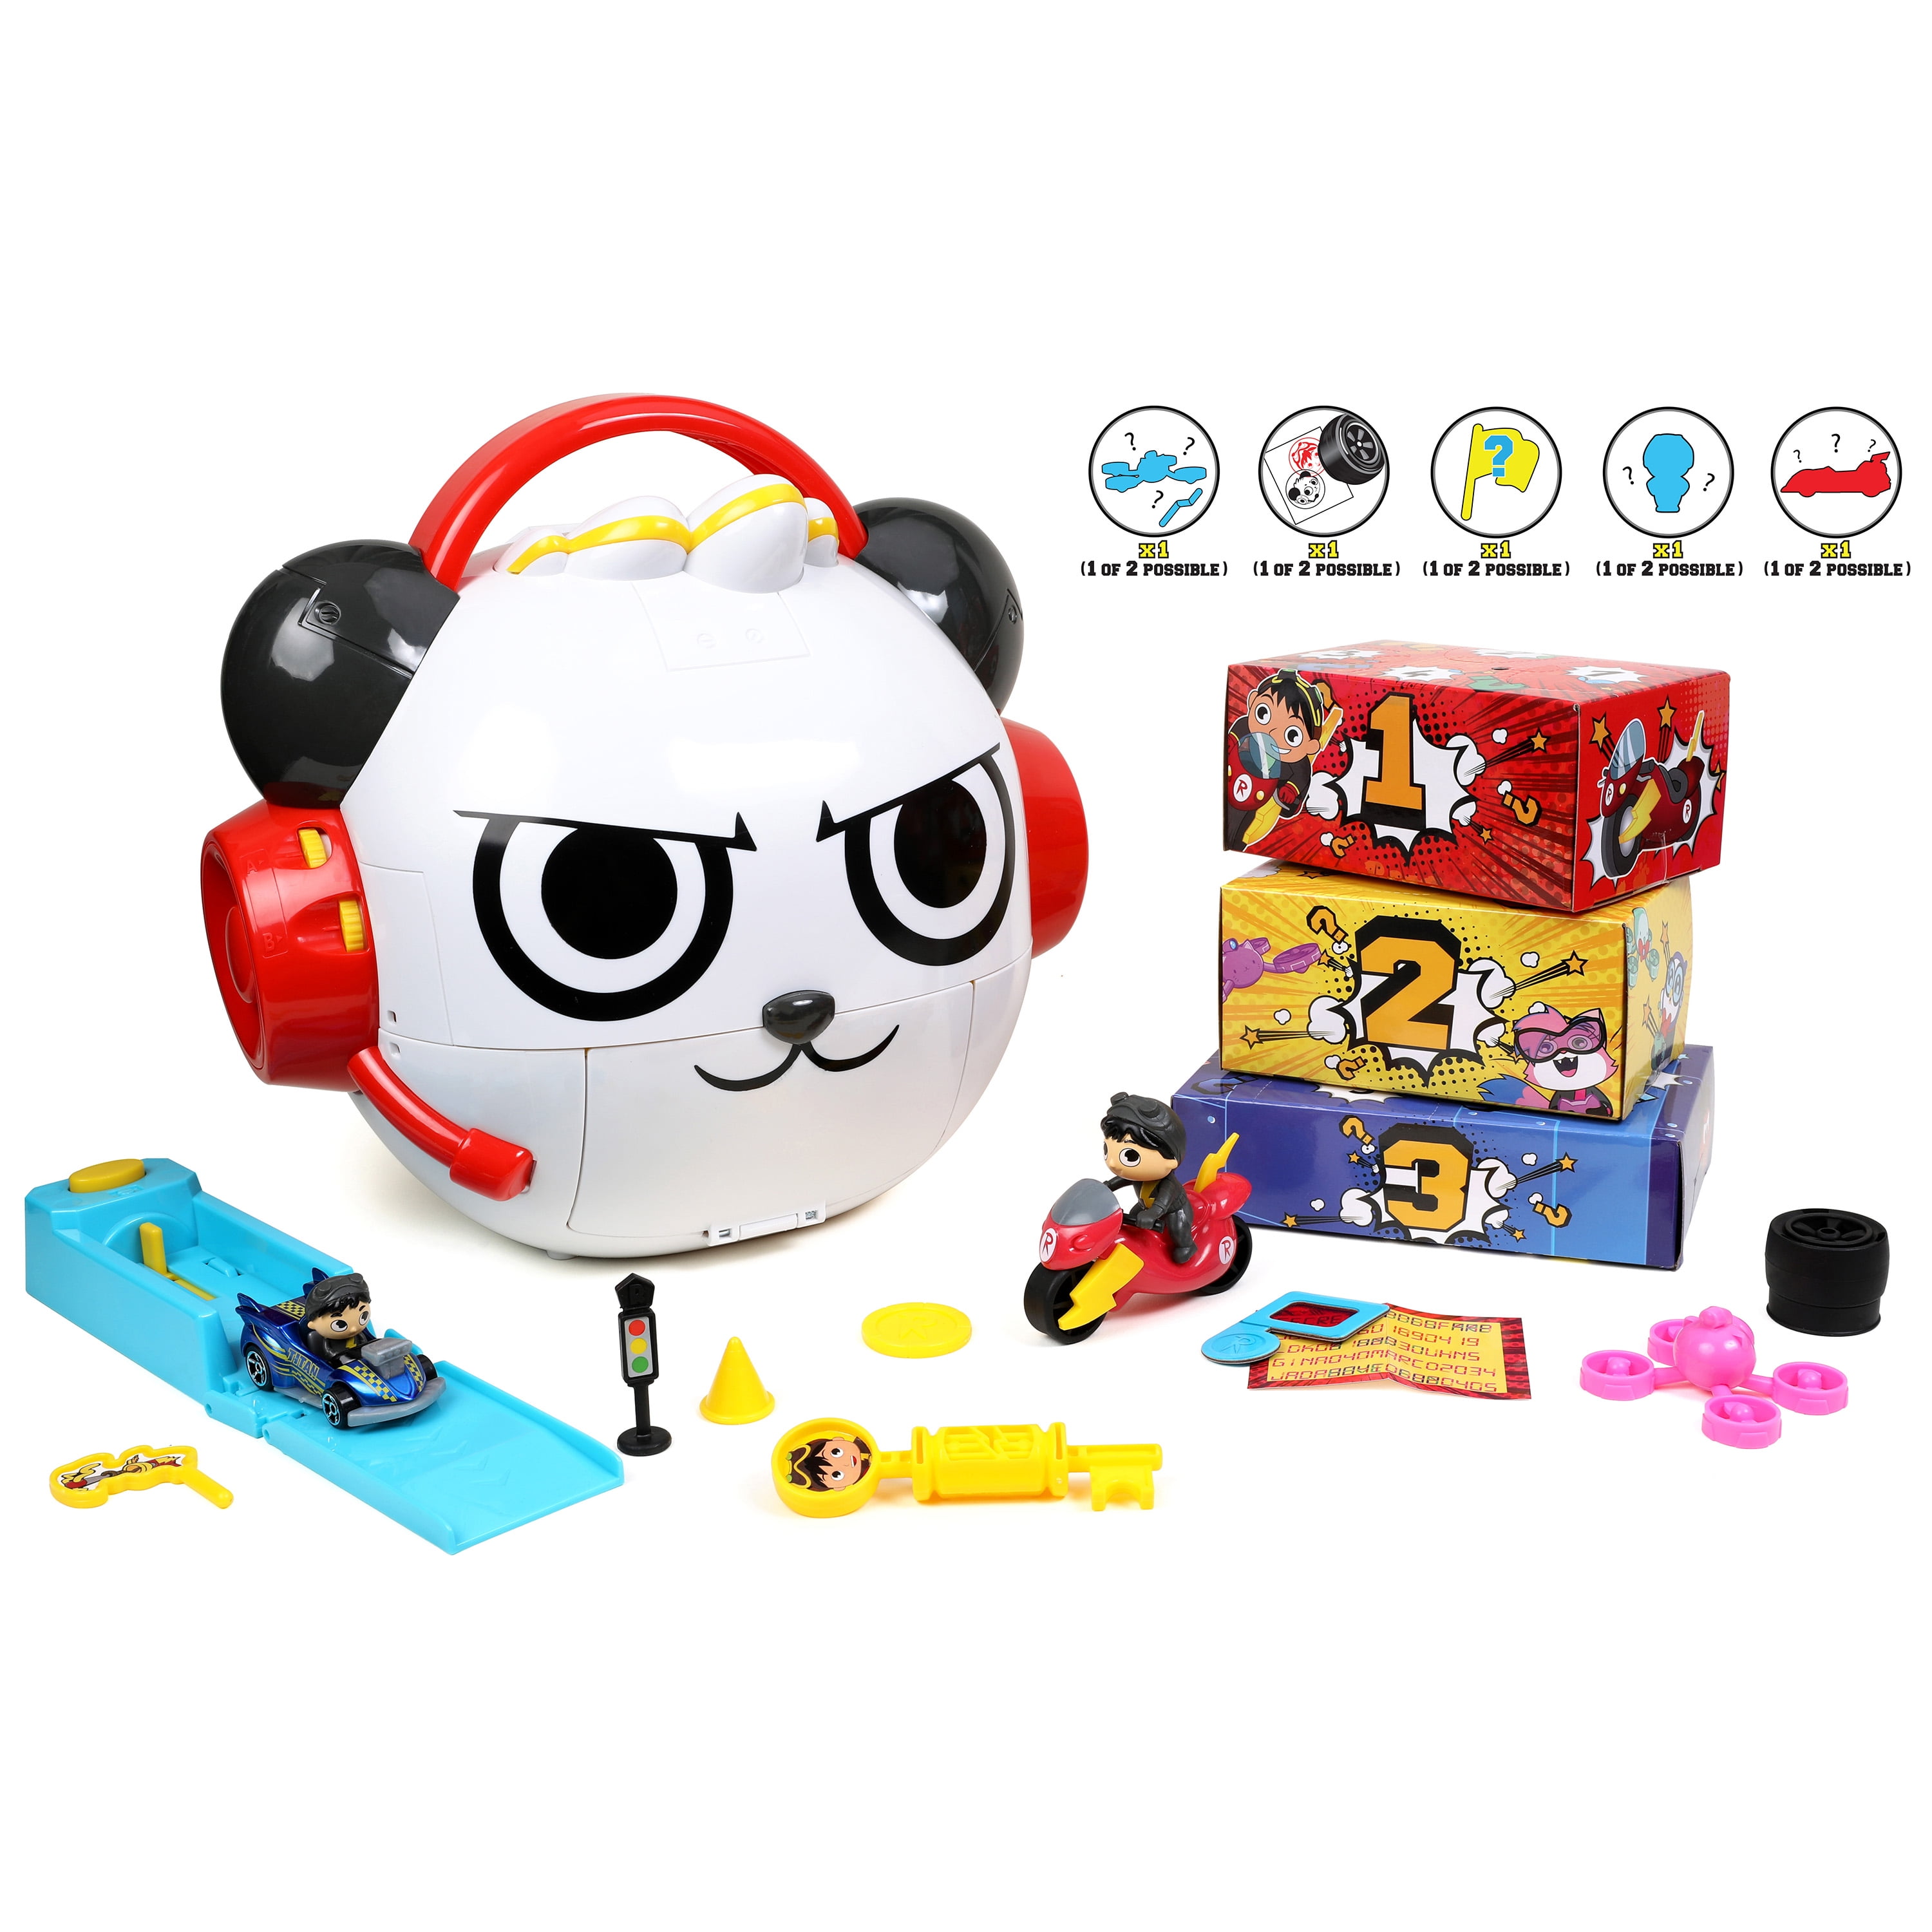 Jada Toys - Ryan's World Combo Panda Head Playset